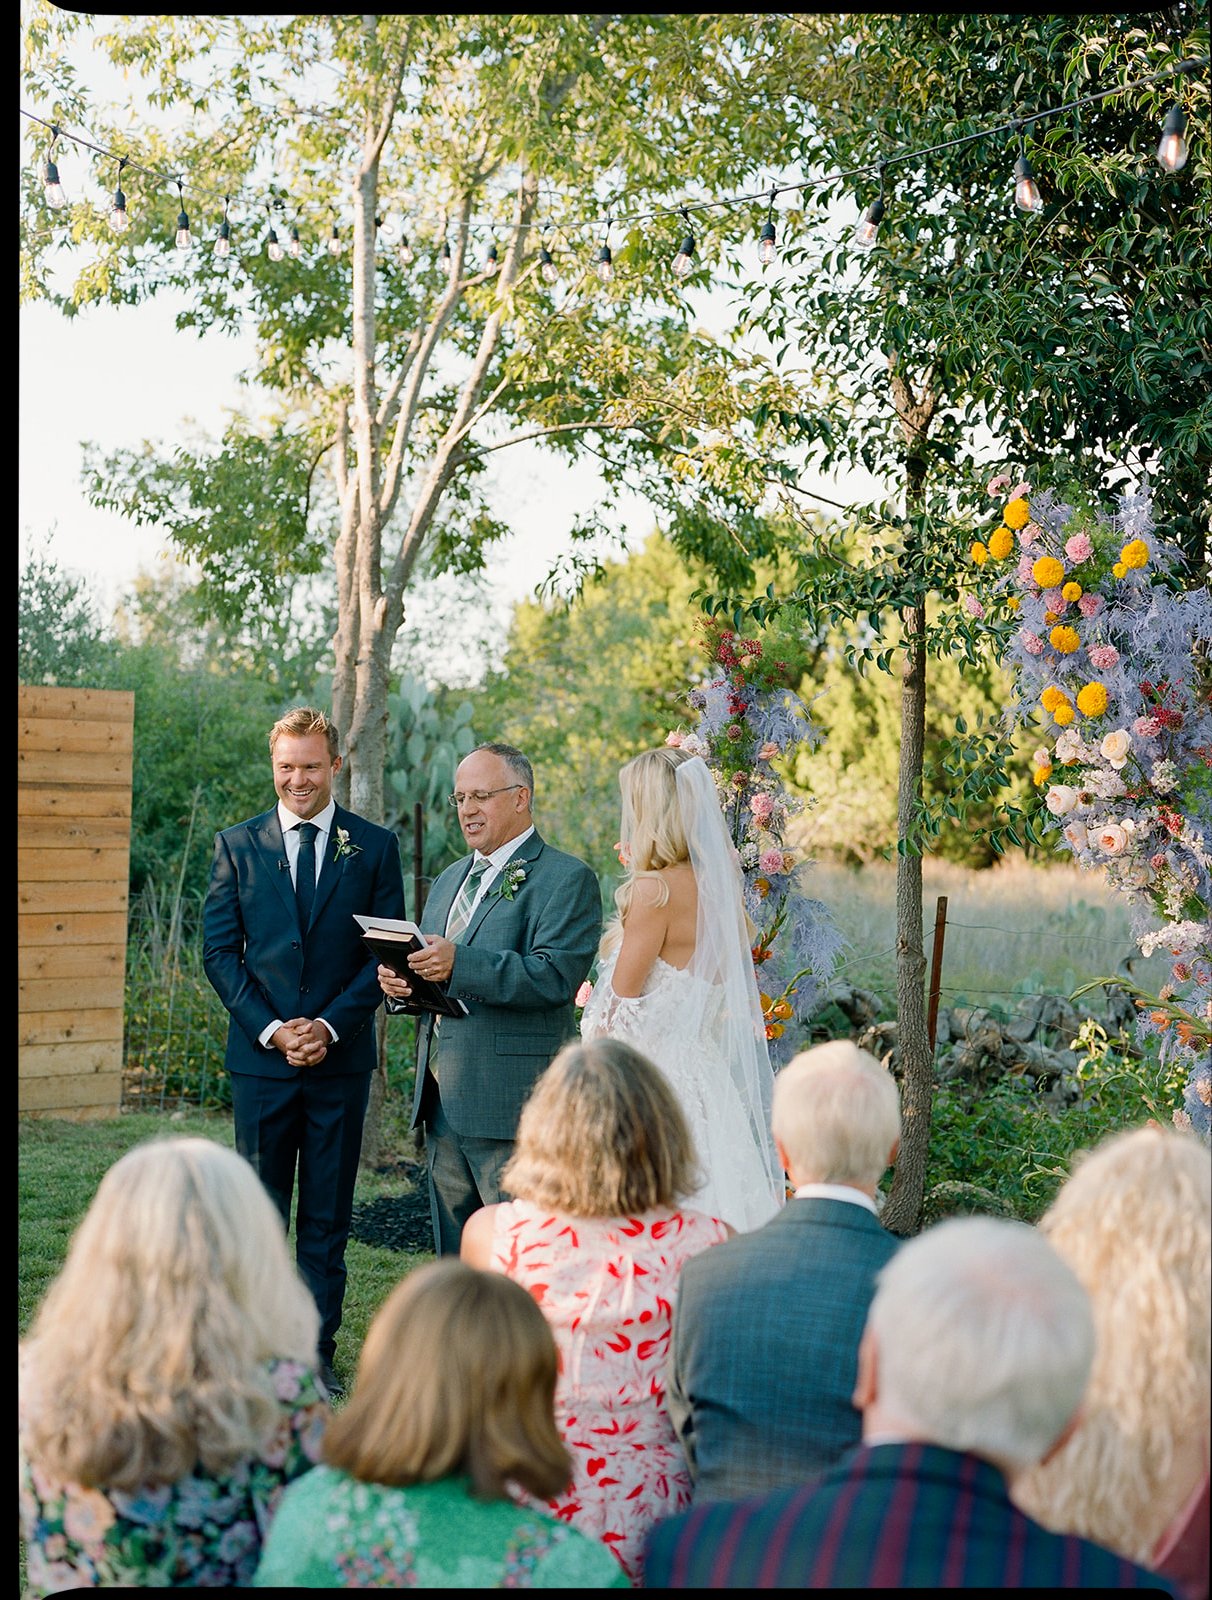 Best-Austin-Wedding-Photographers-Elopement-Film-35mm-Asheville-Santa-Barbara-Backyard-38.jpg